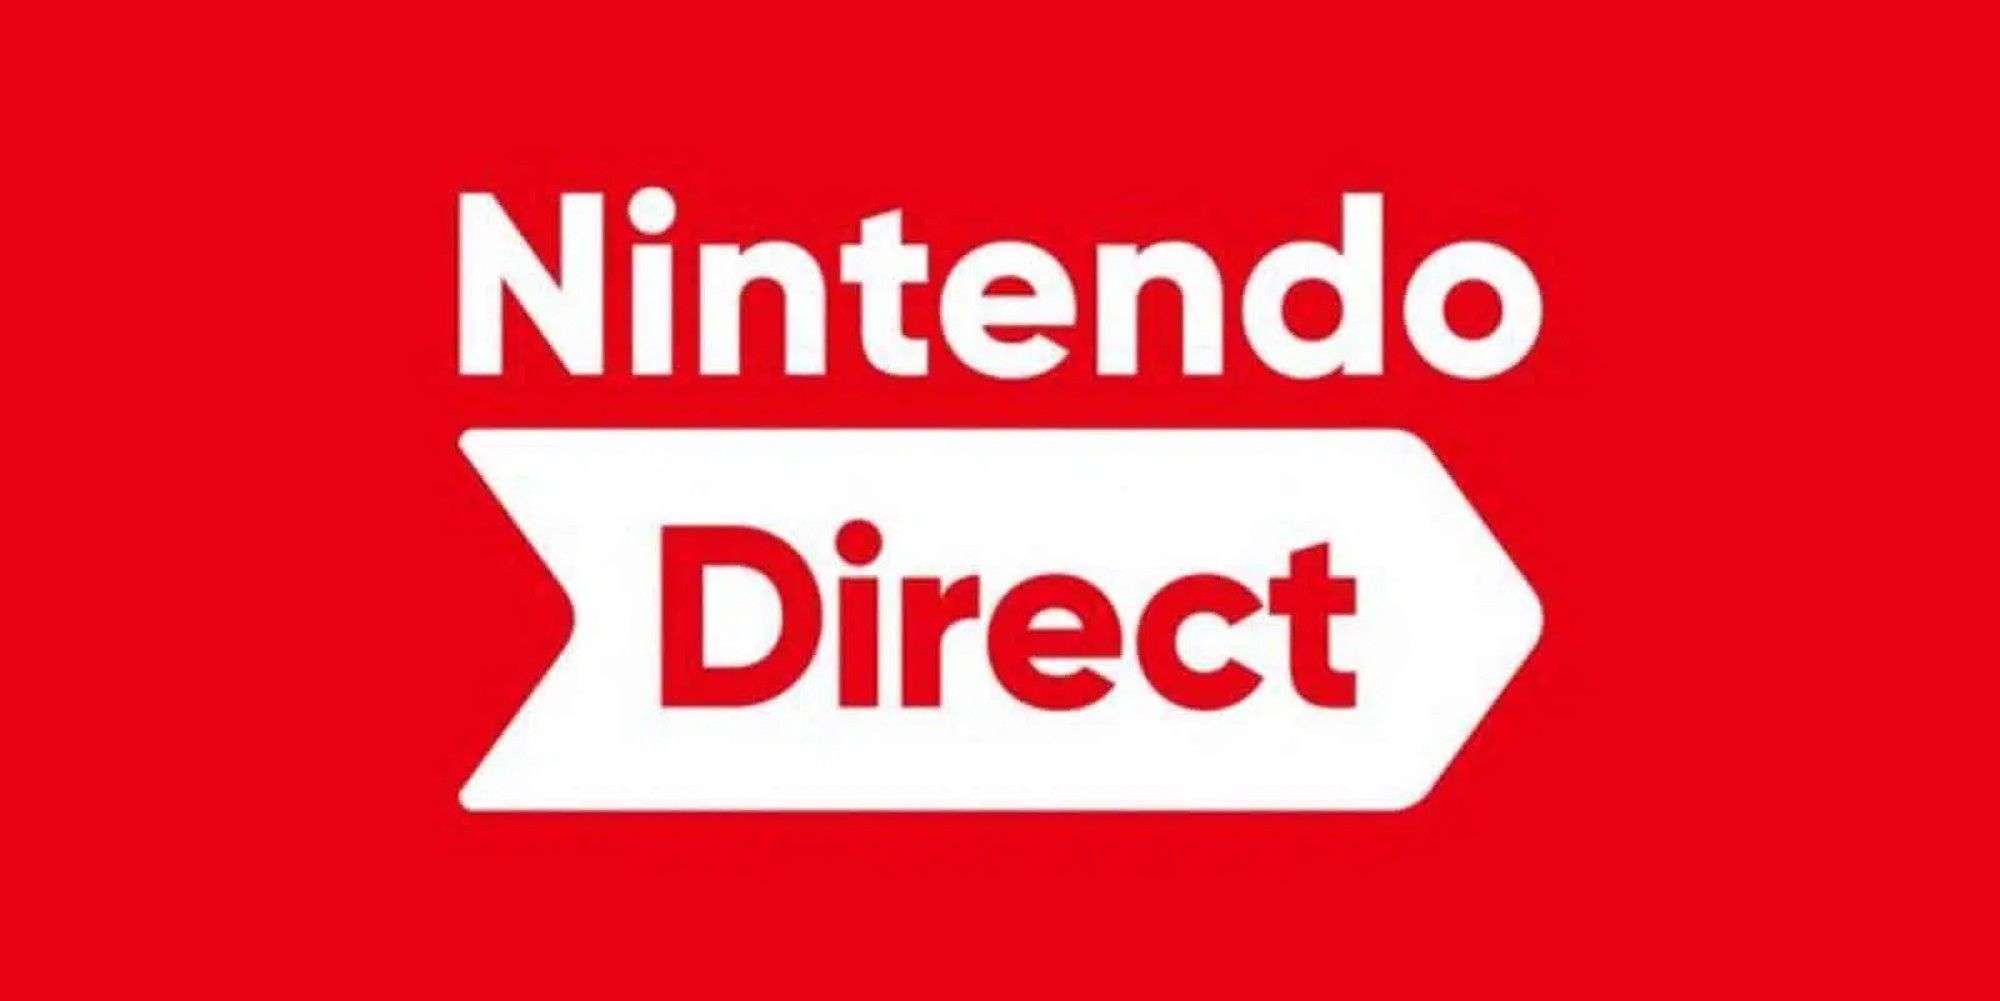 stupjam 🦑comms work🐙 on X: my summary for Nintendo Direct 9-13